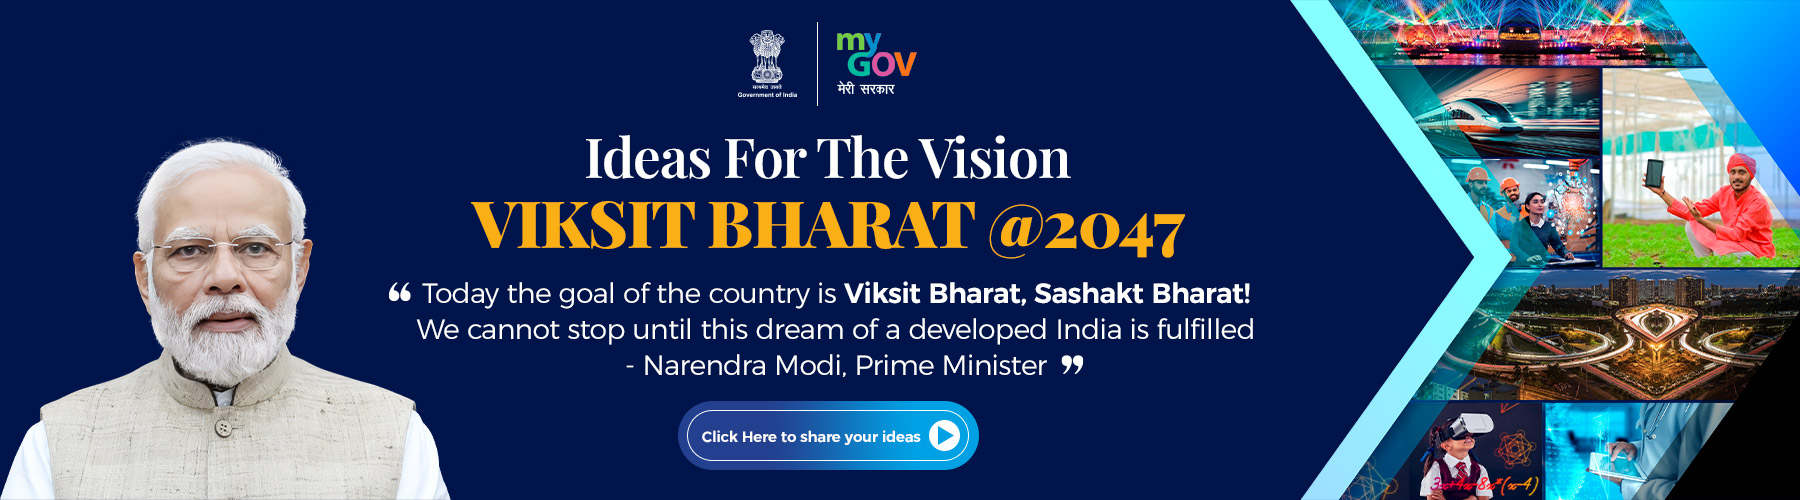 Ideas for the Vision Viksit Bharat@2047